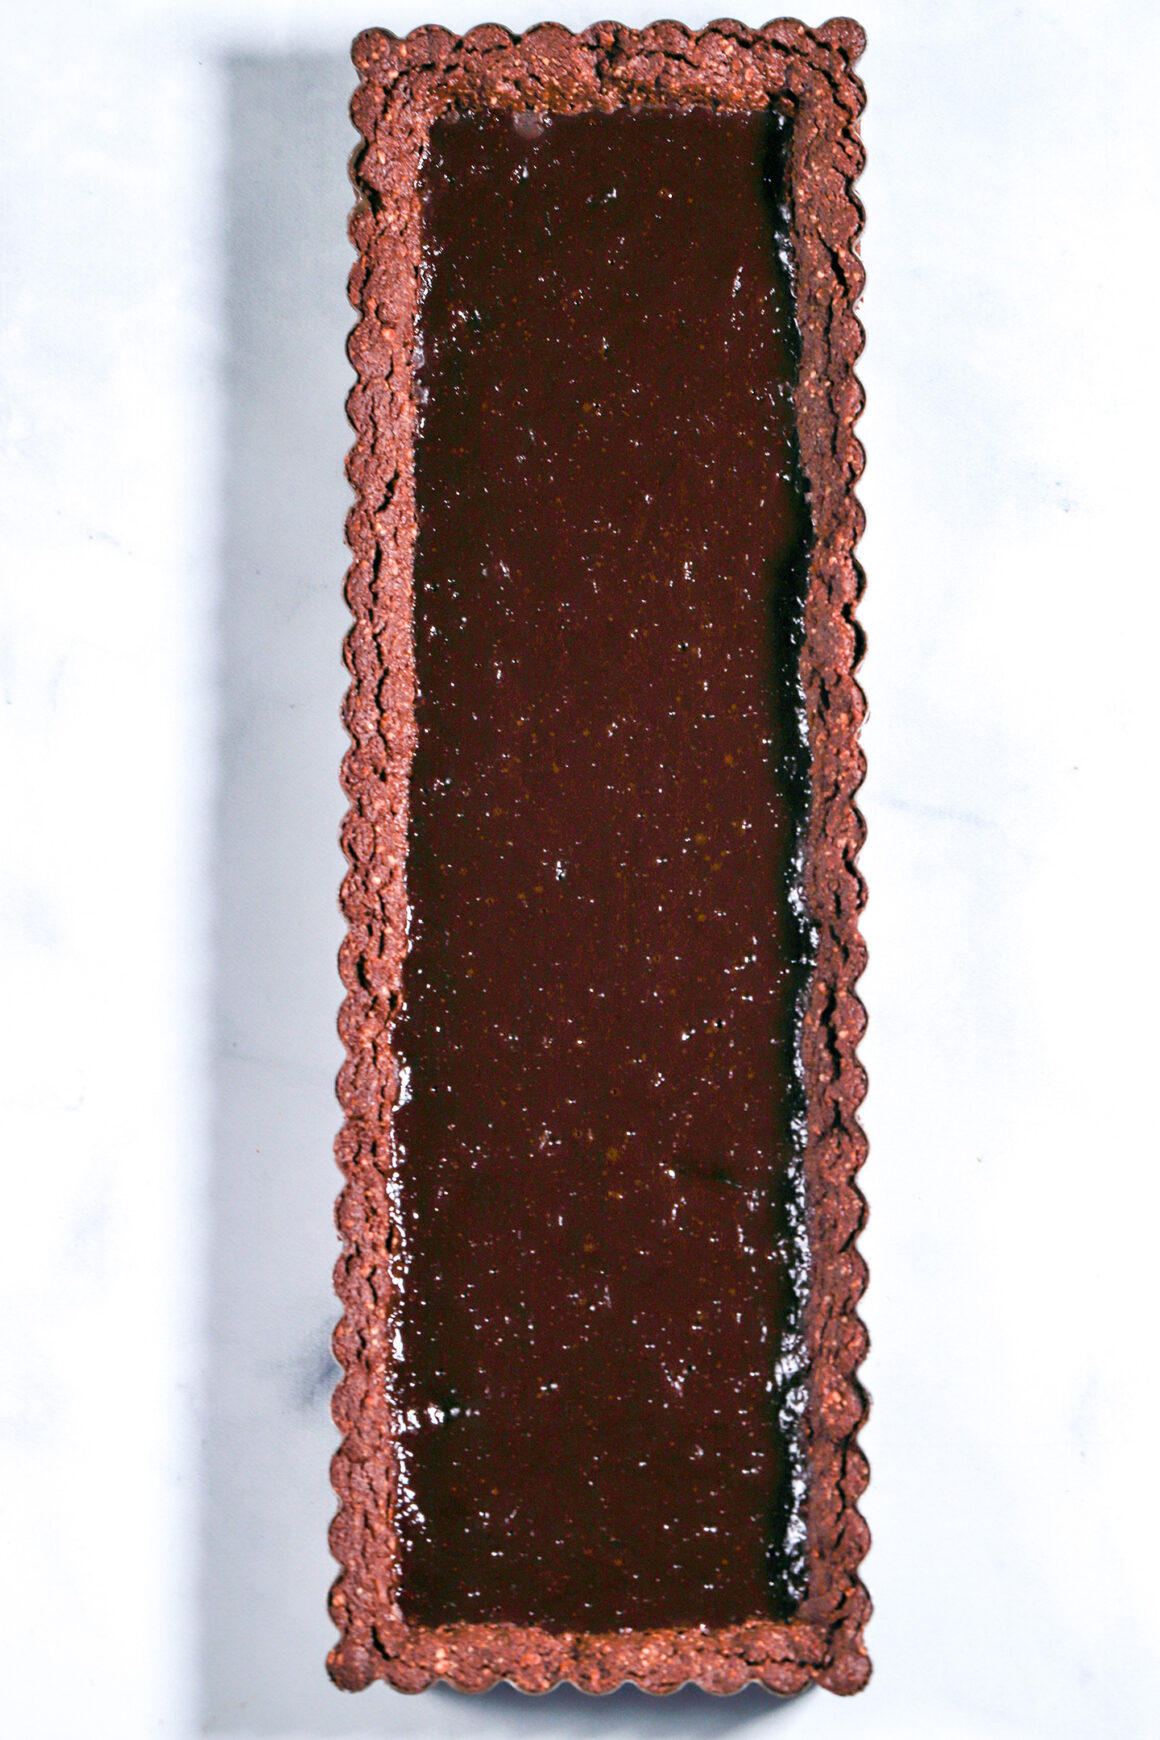 Chocolate Ganache in Chocolate Crust